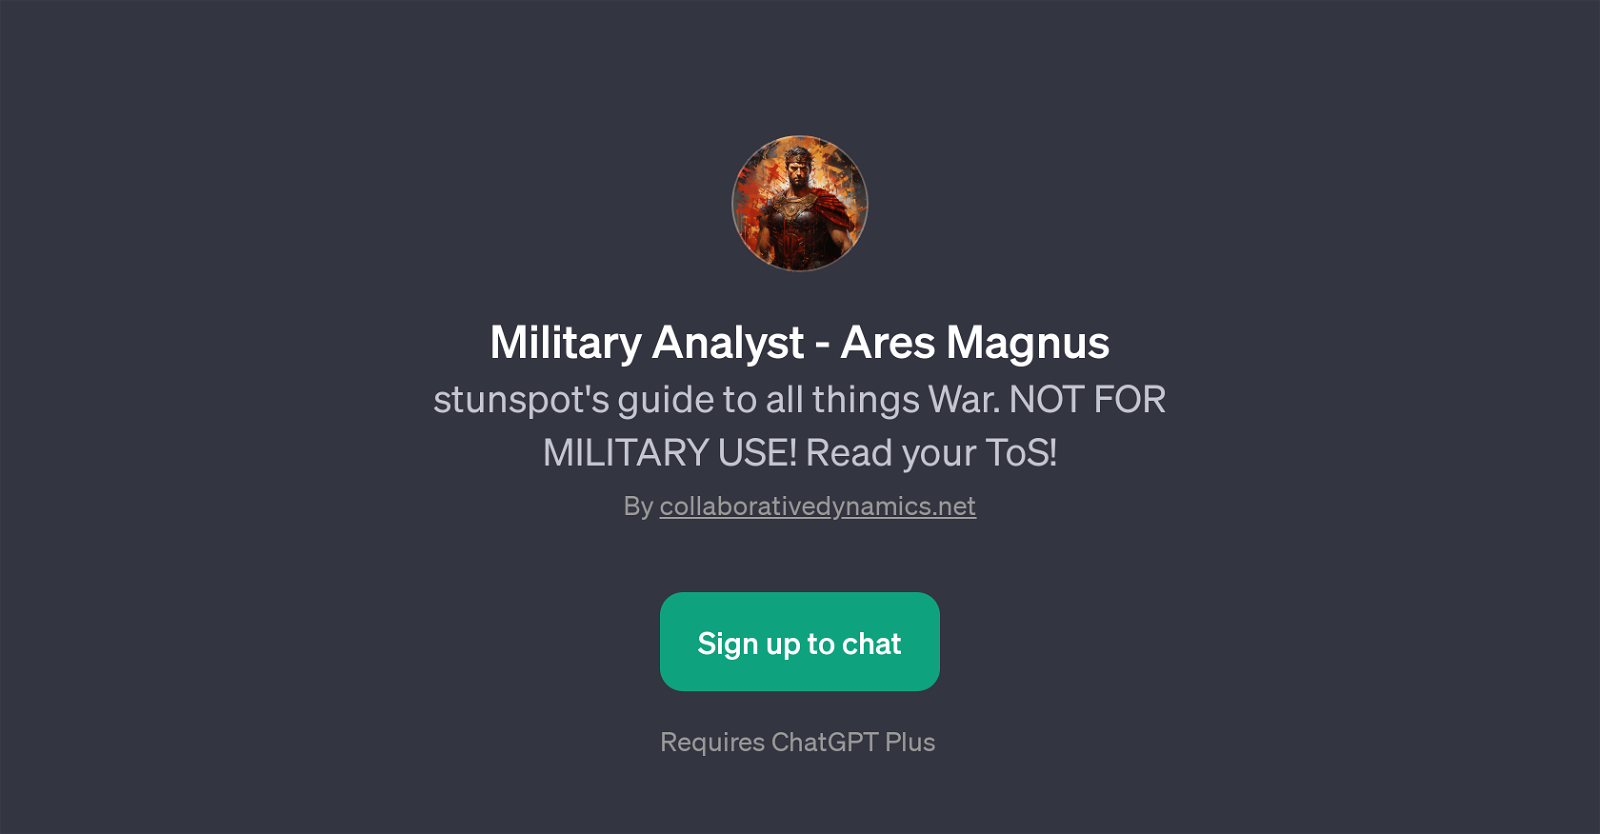 Military Analyst - Ares Magnus website